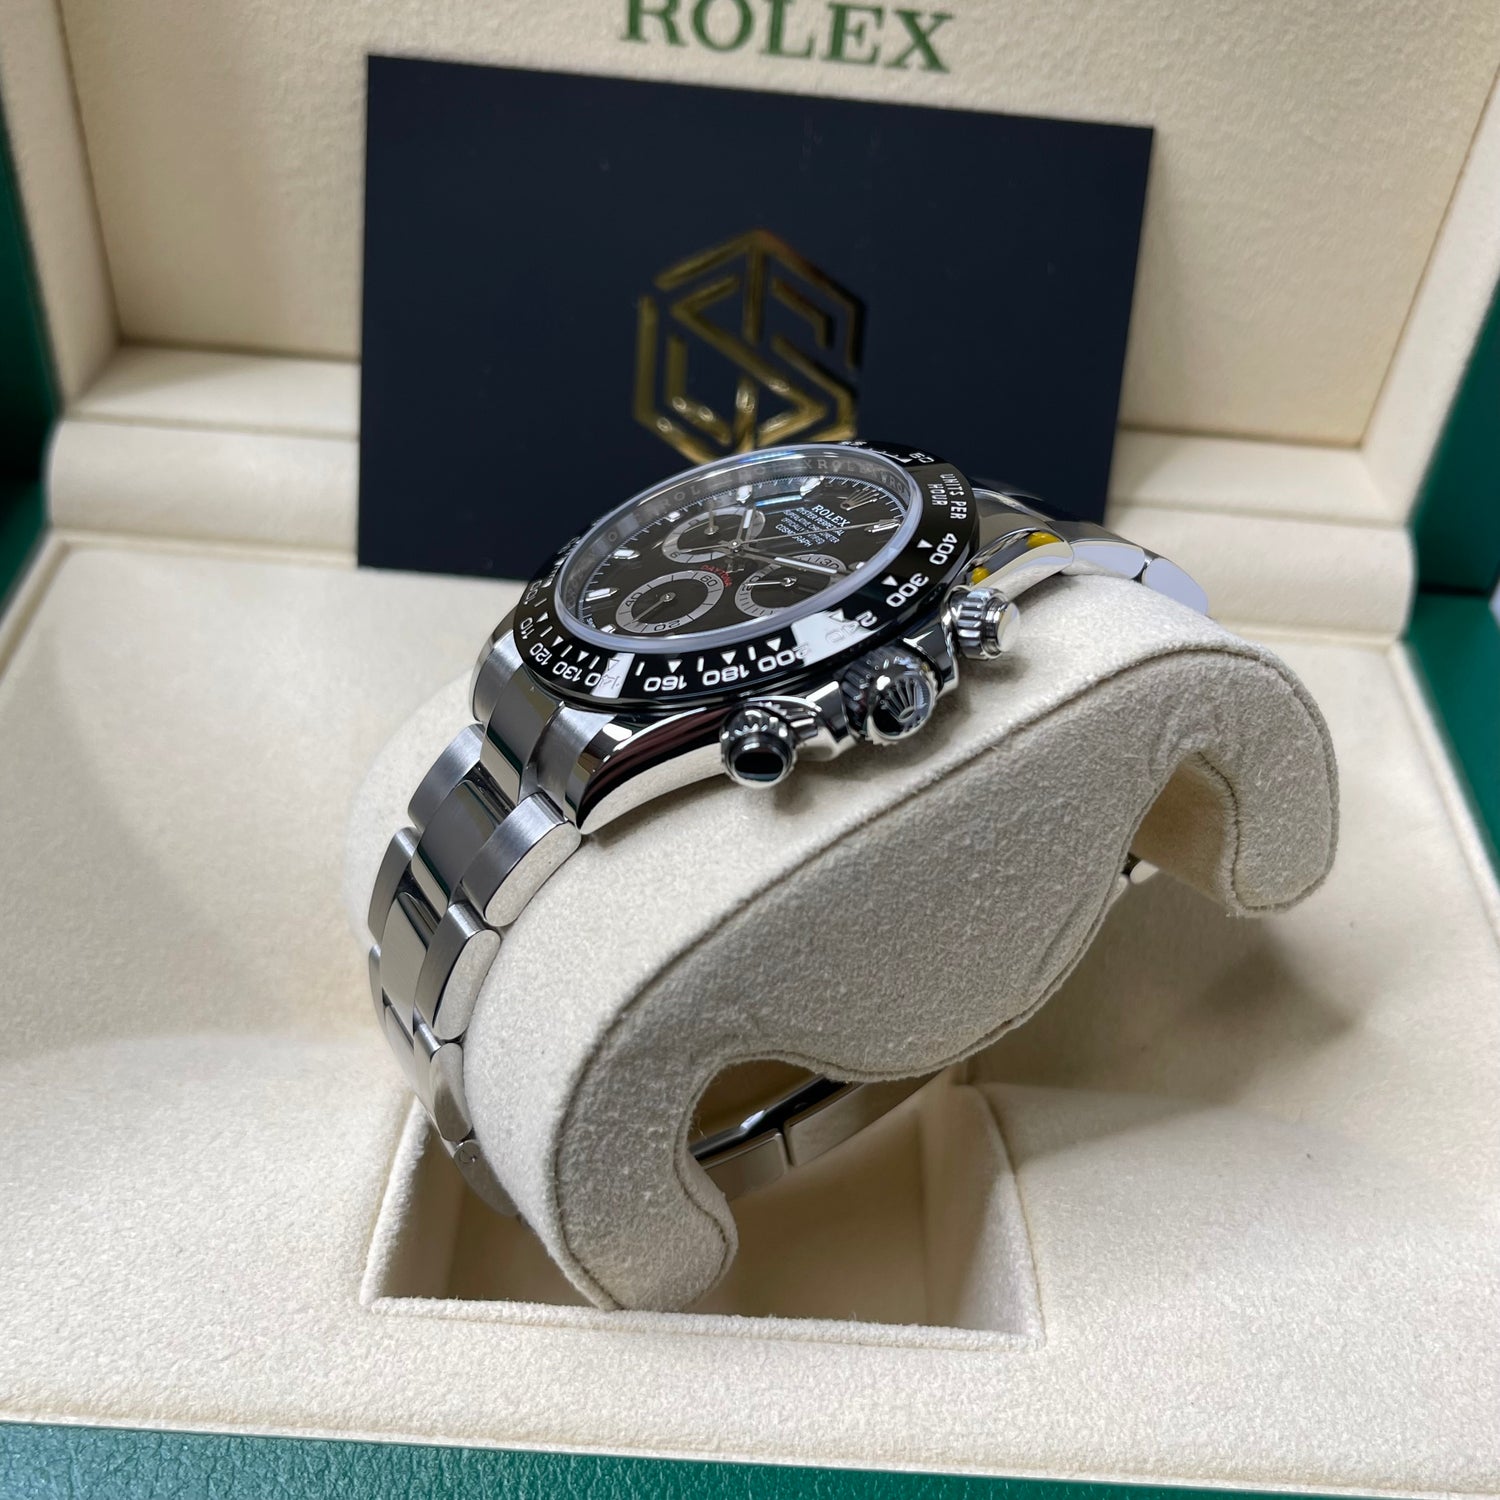 Rolex Cosmograph Daytona Ceramic Black Dial 116500LN 2020 Full Set Watch